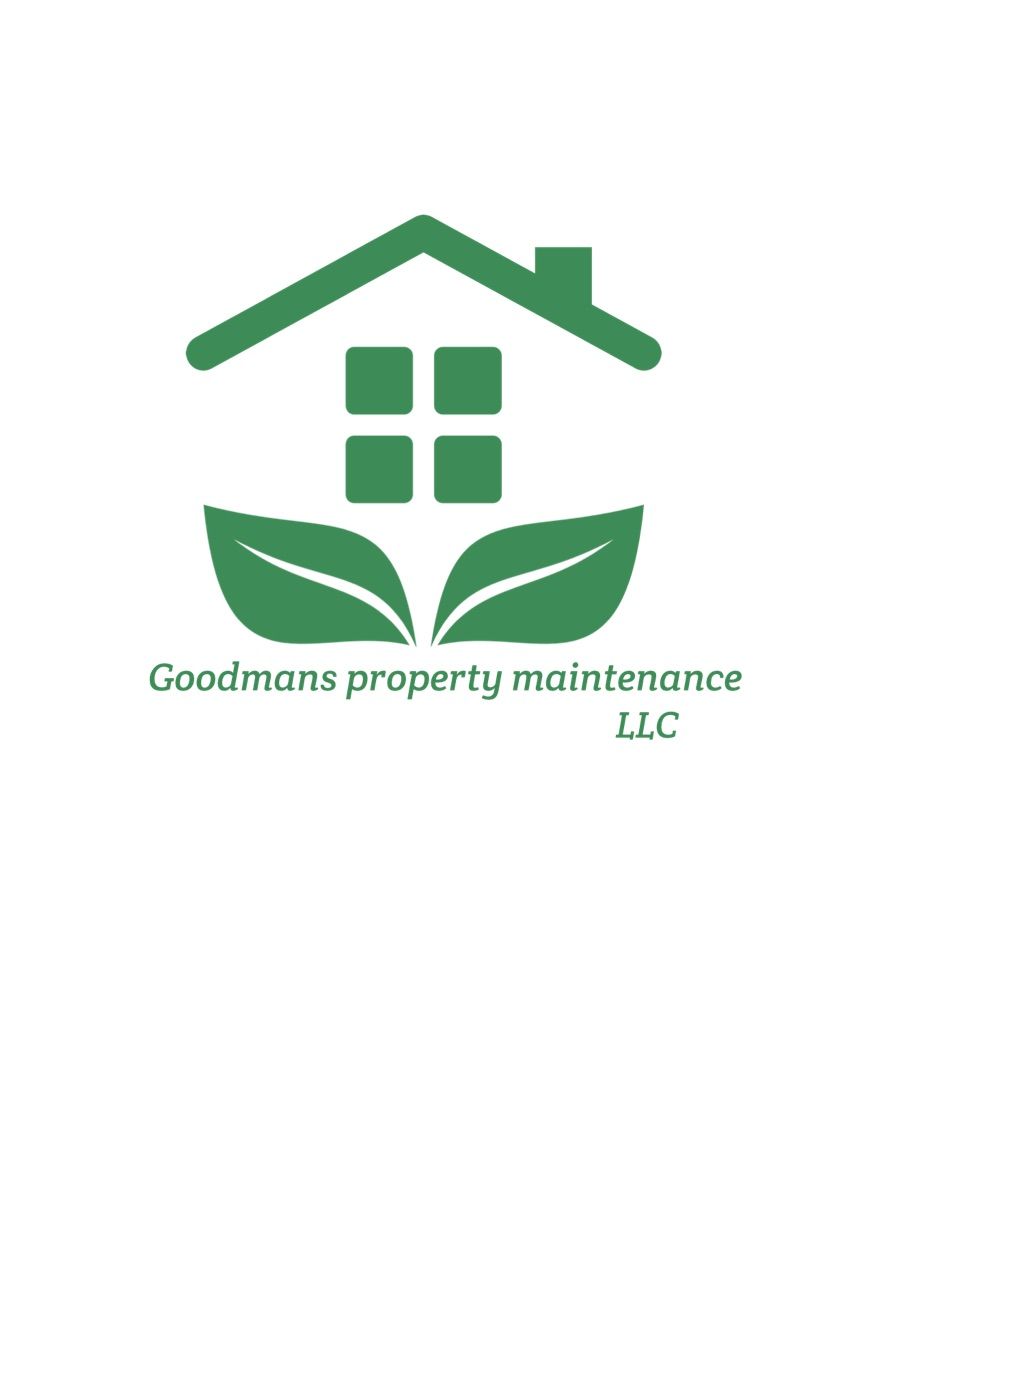 Goodman’s property maintenance llc